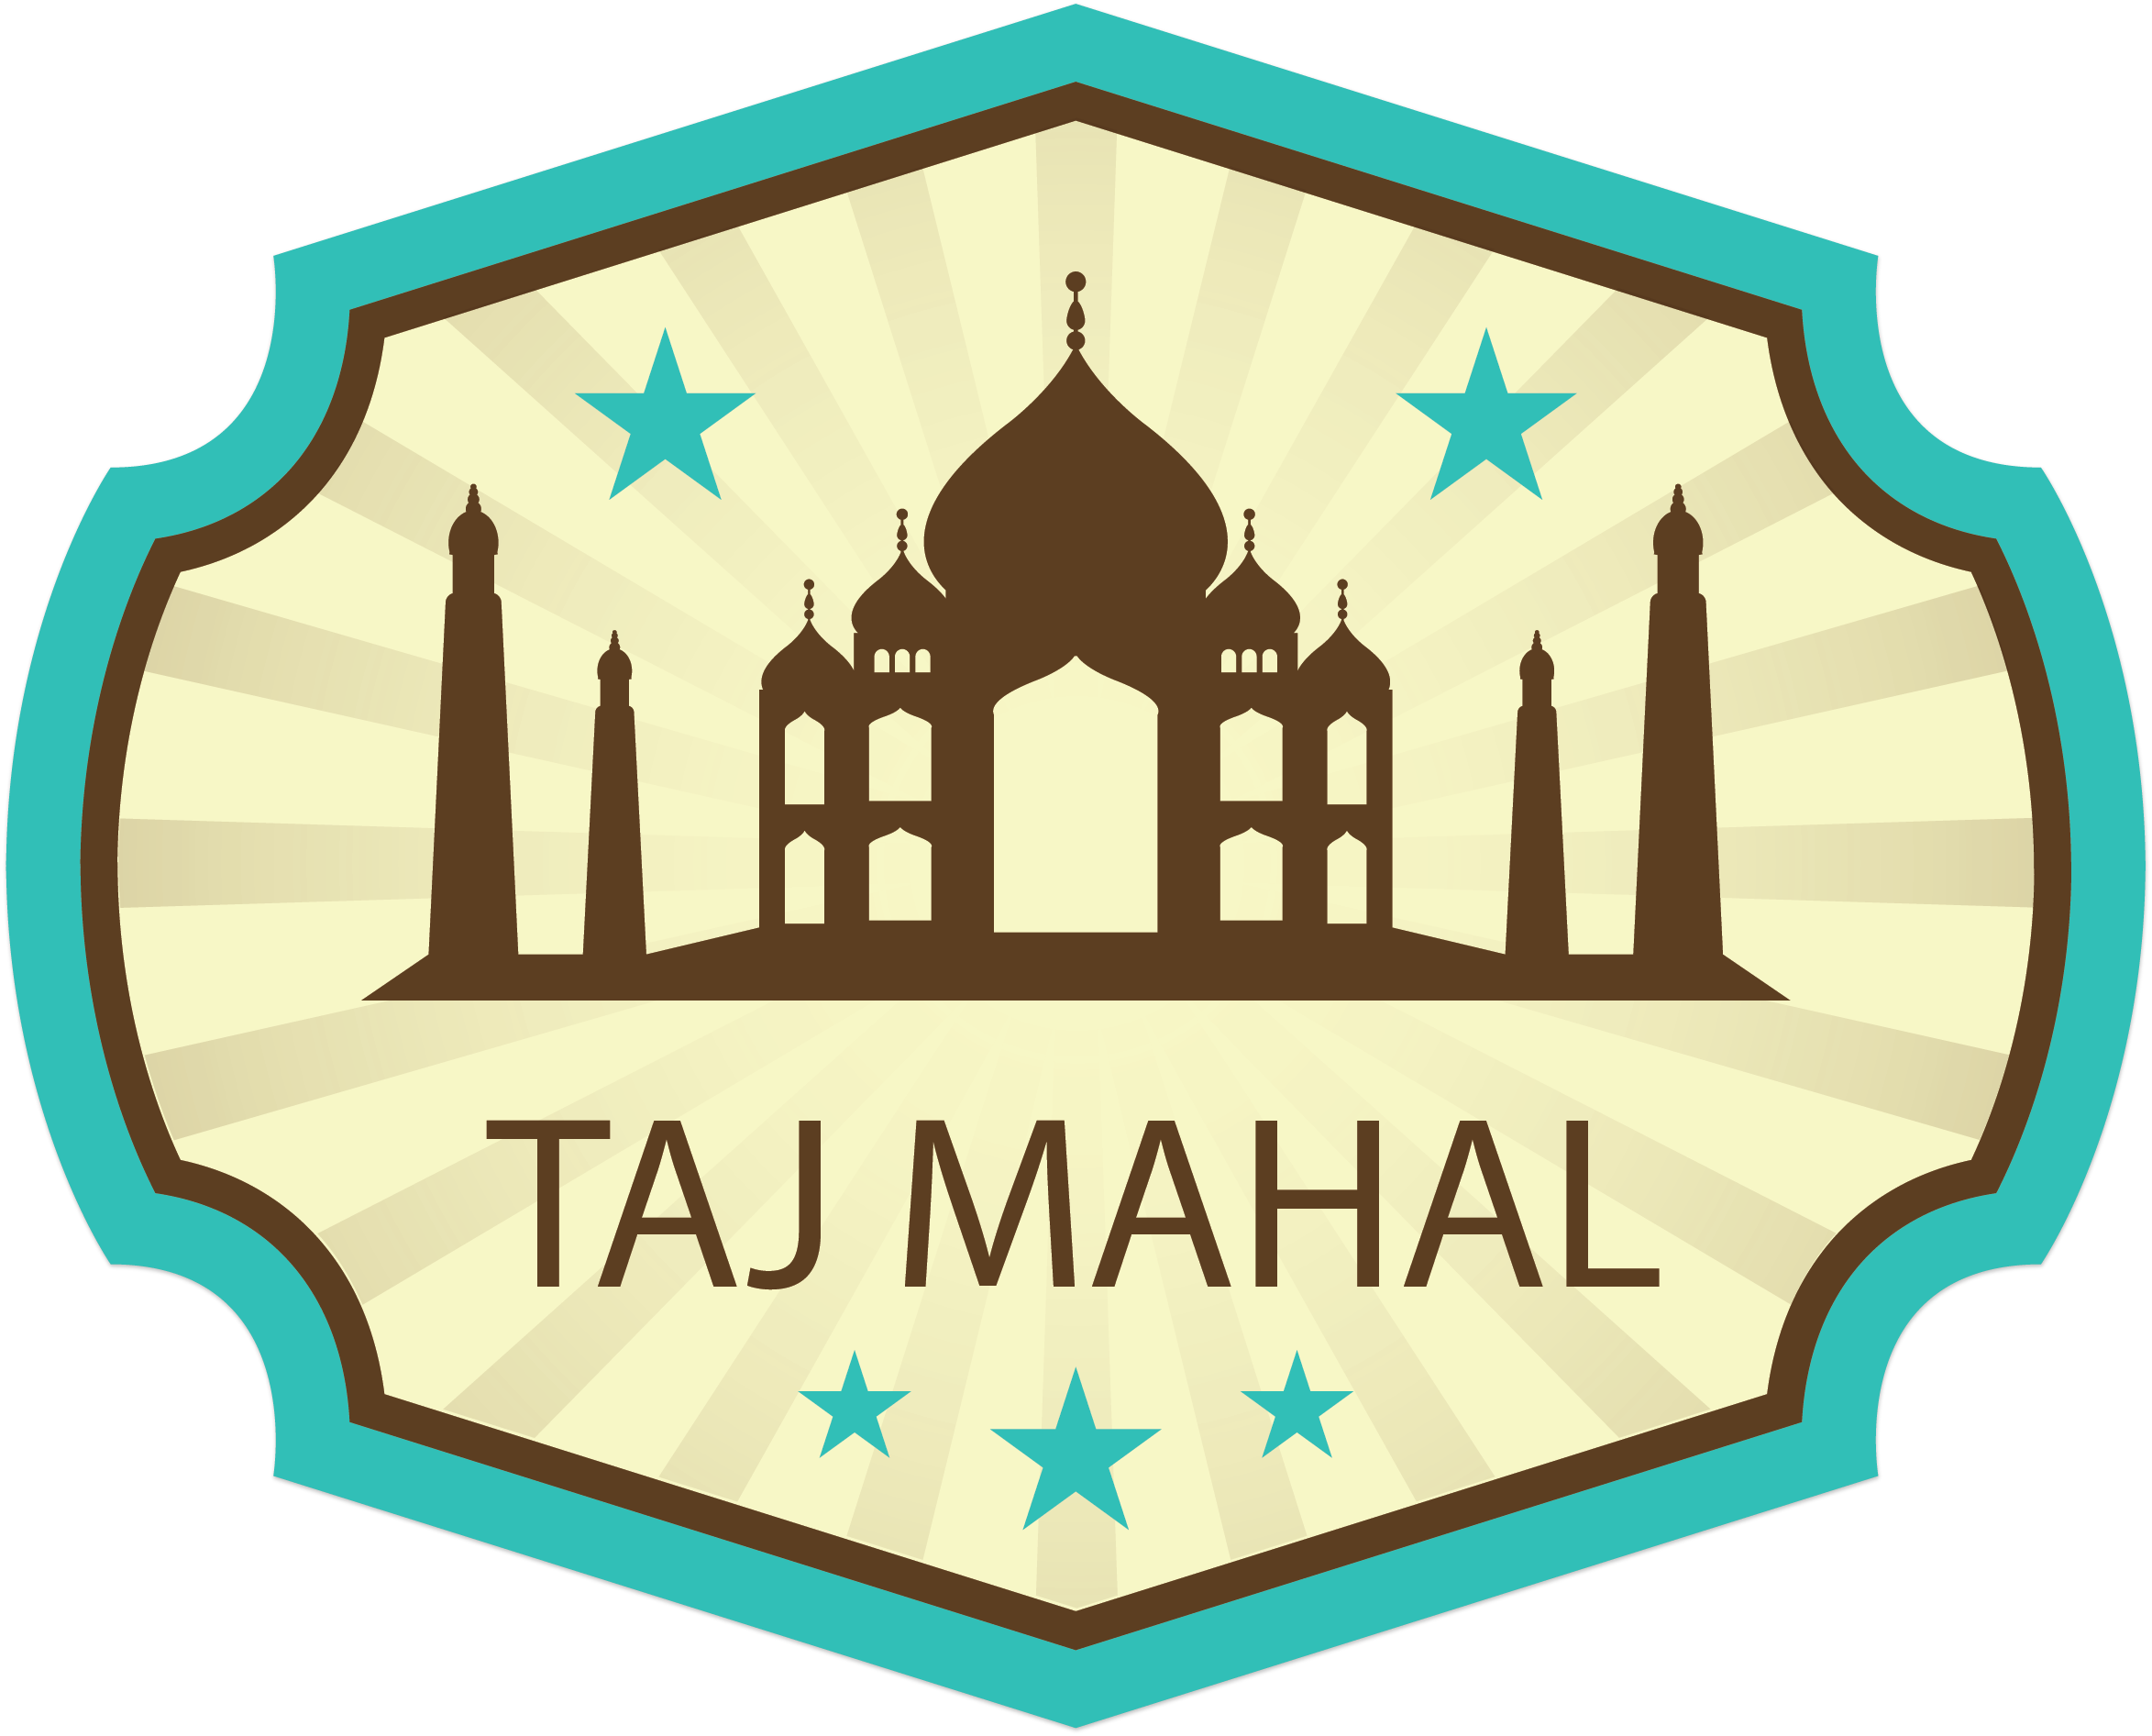 Your Name - Logo Of Taj Hotel Transparent PNG - 700x466 - Free Download on  NicePNG